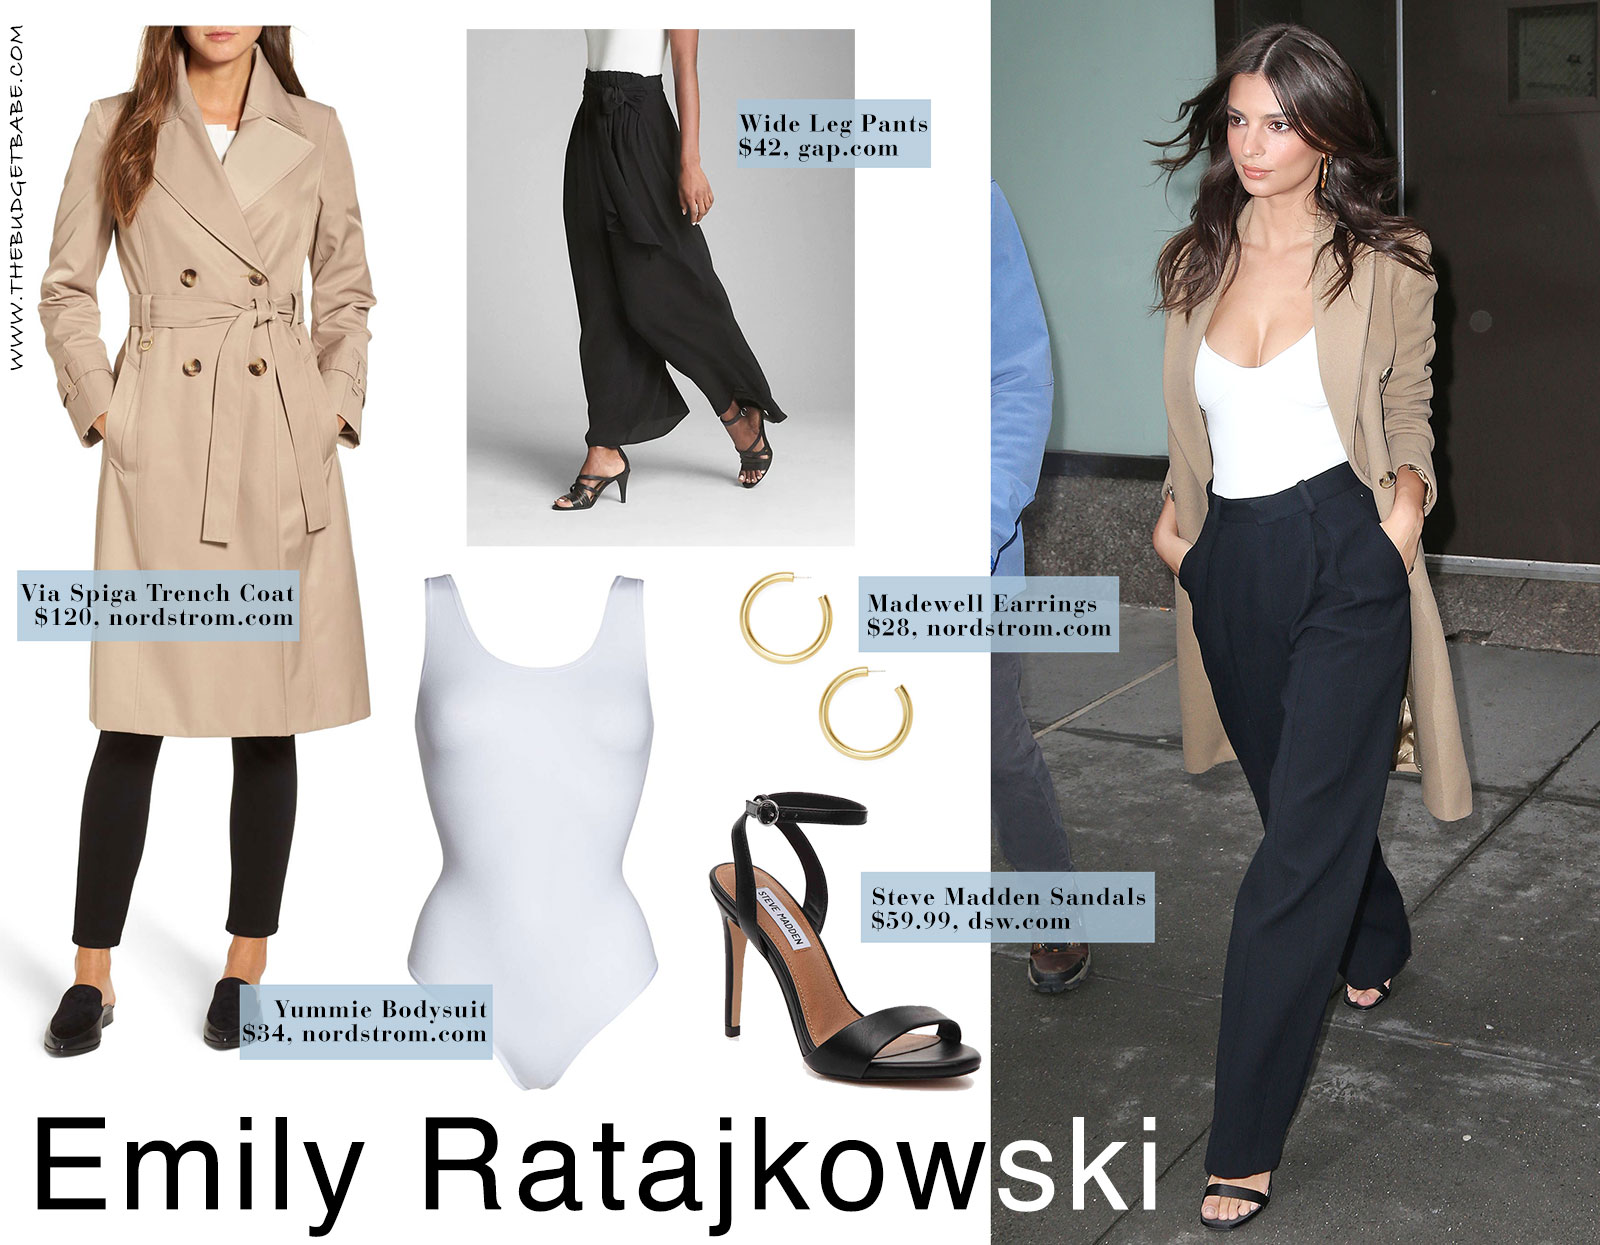 Emily Ratajkowski's white bodysuit, black wide leg pants and trench coat look for less.